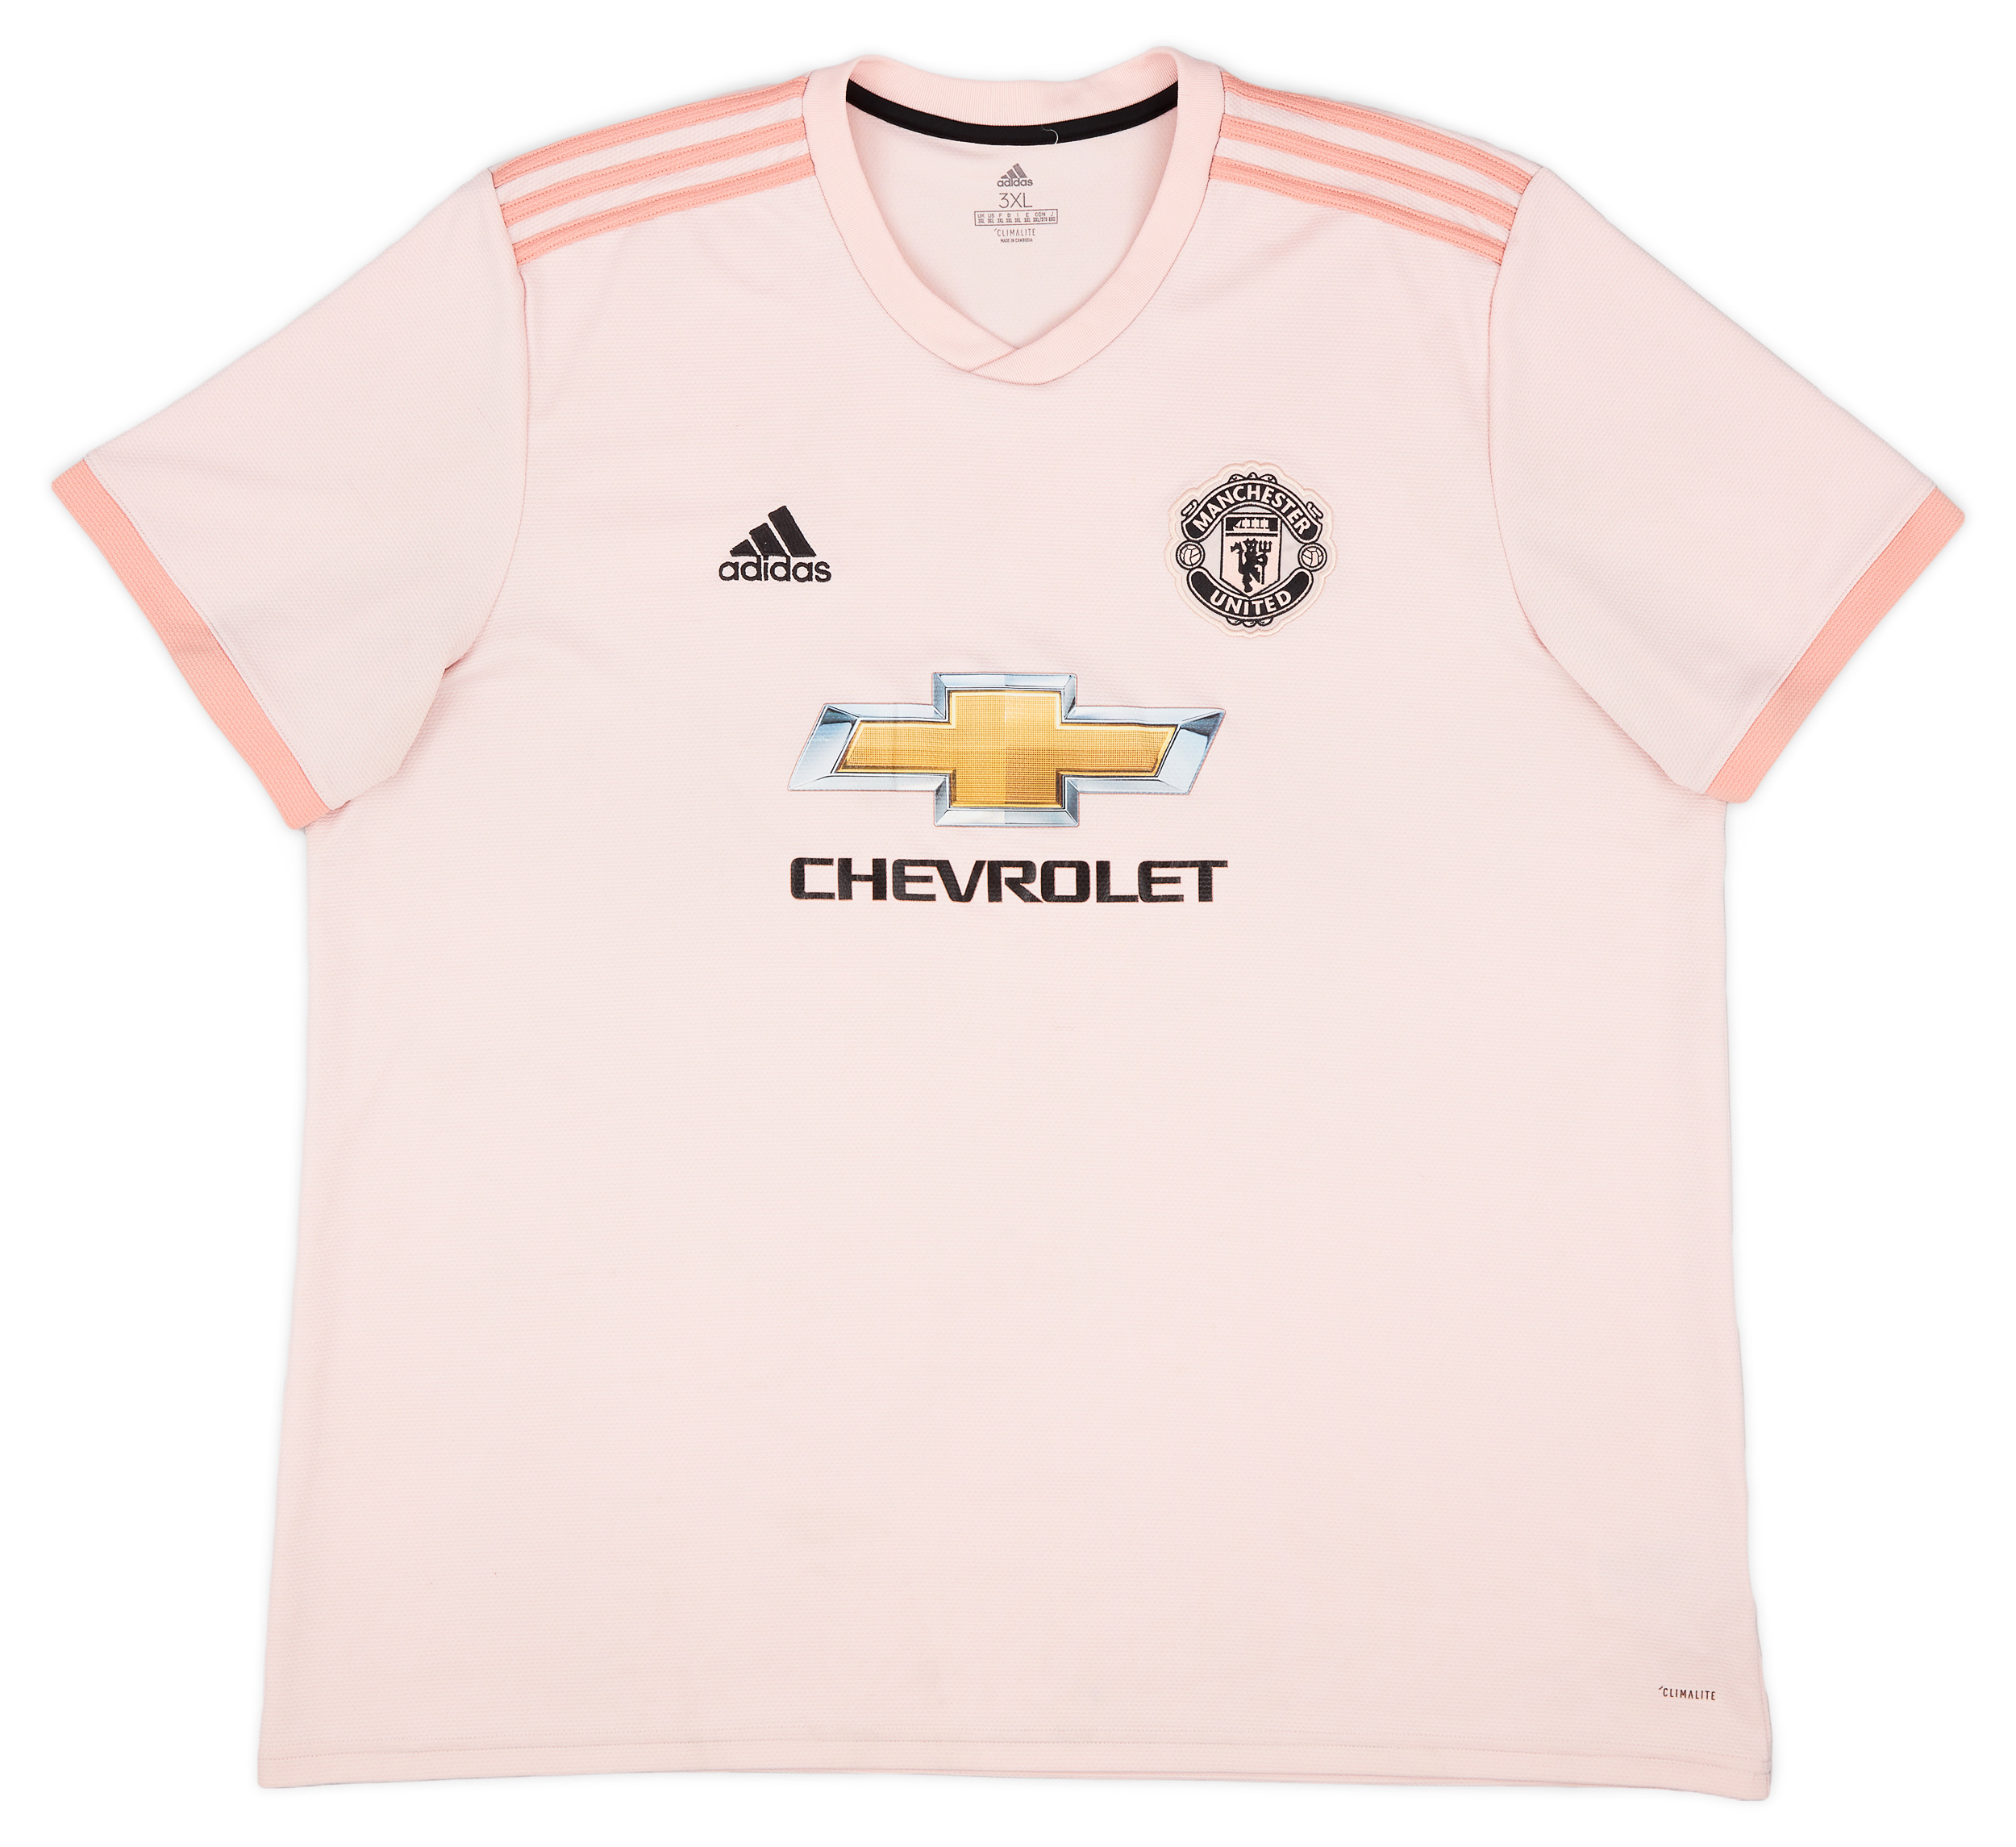 2018-19 Manchester United Away Shirt - Very Good 6/10 - ()